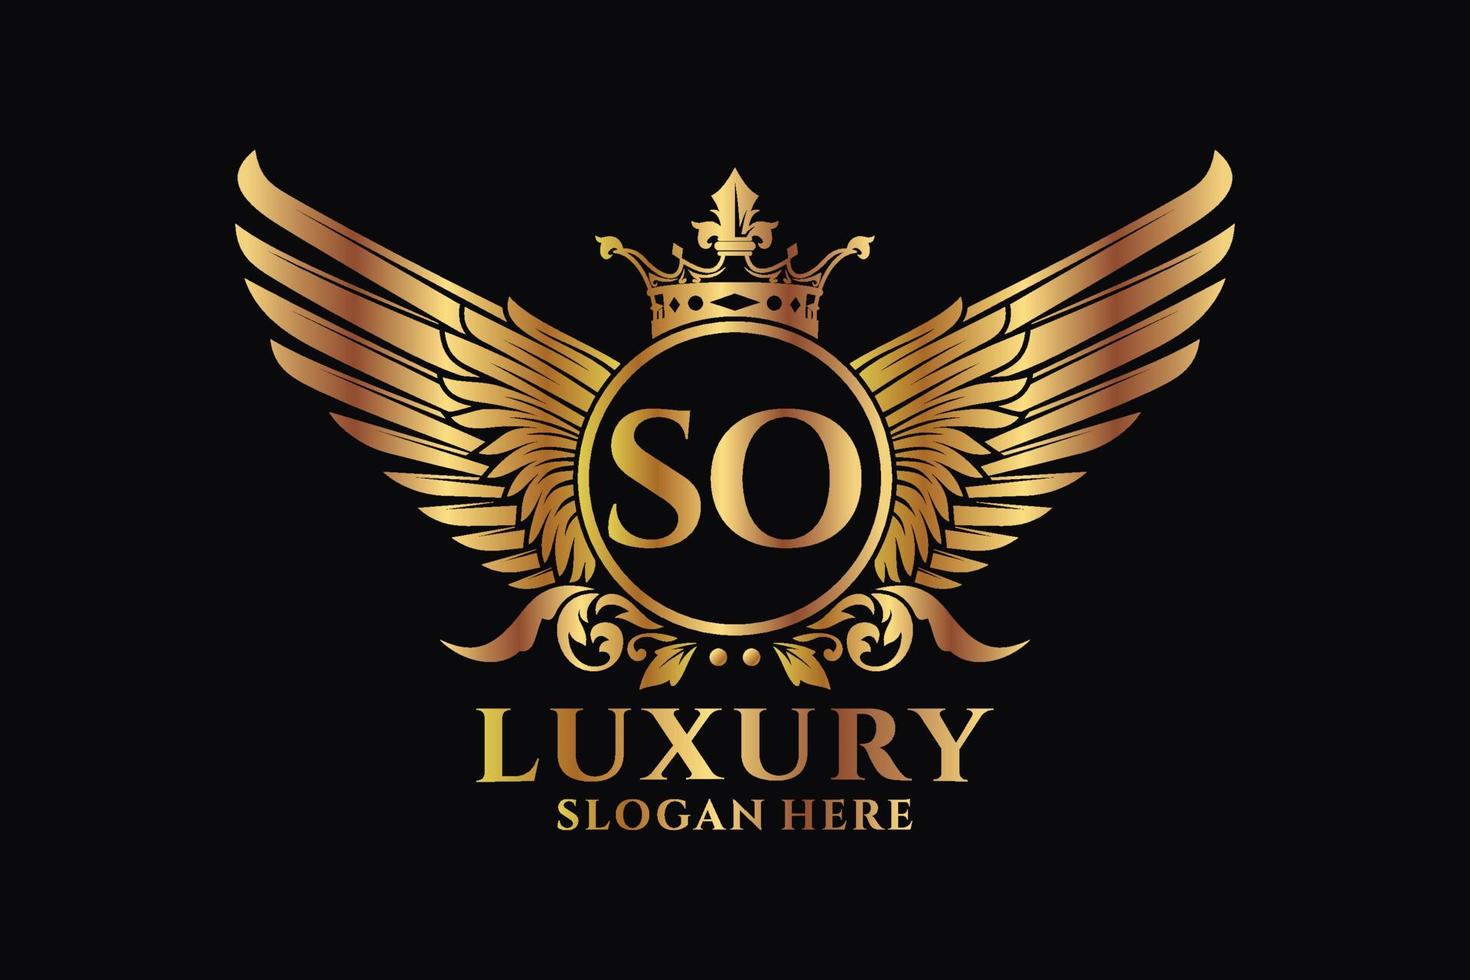 luxe Koninklijk vleugel brief zo kam goud kleur logo vector, zege logo, kam logo, vleugel logo, vector logo sjabloon.